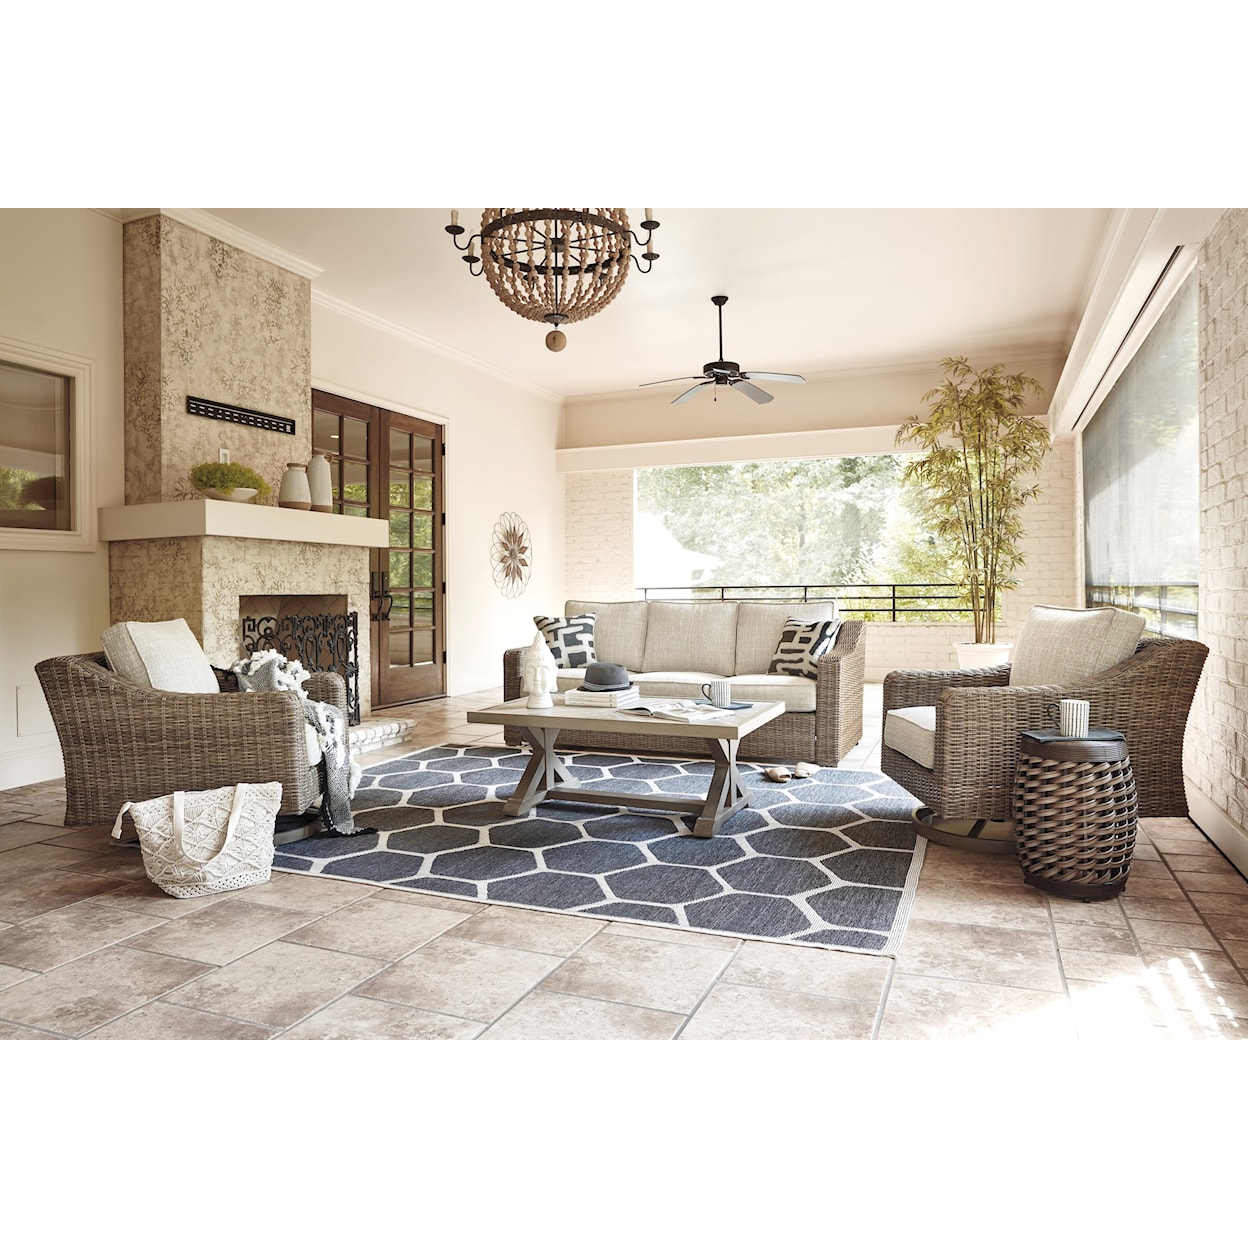 Ashley Furniture Signature Design Beachcroft Outdoor Living Room Group